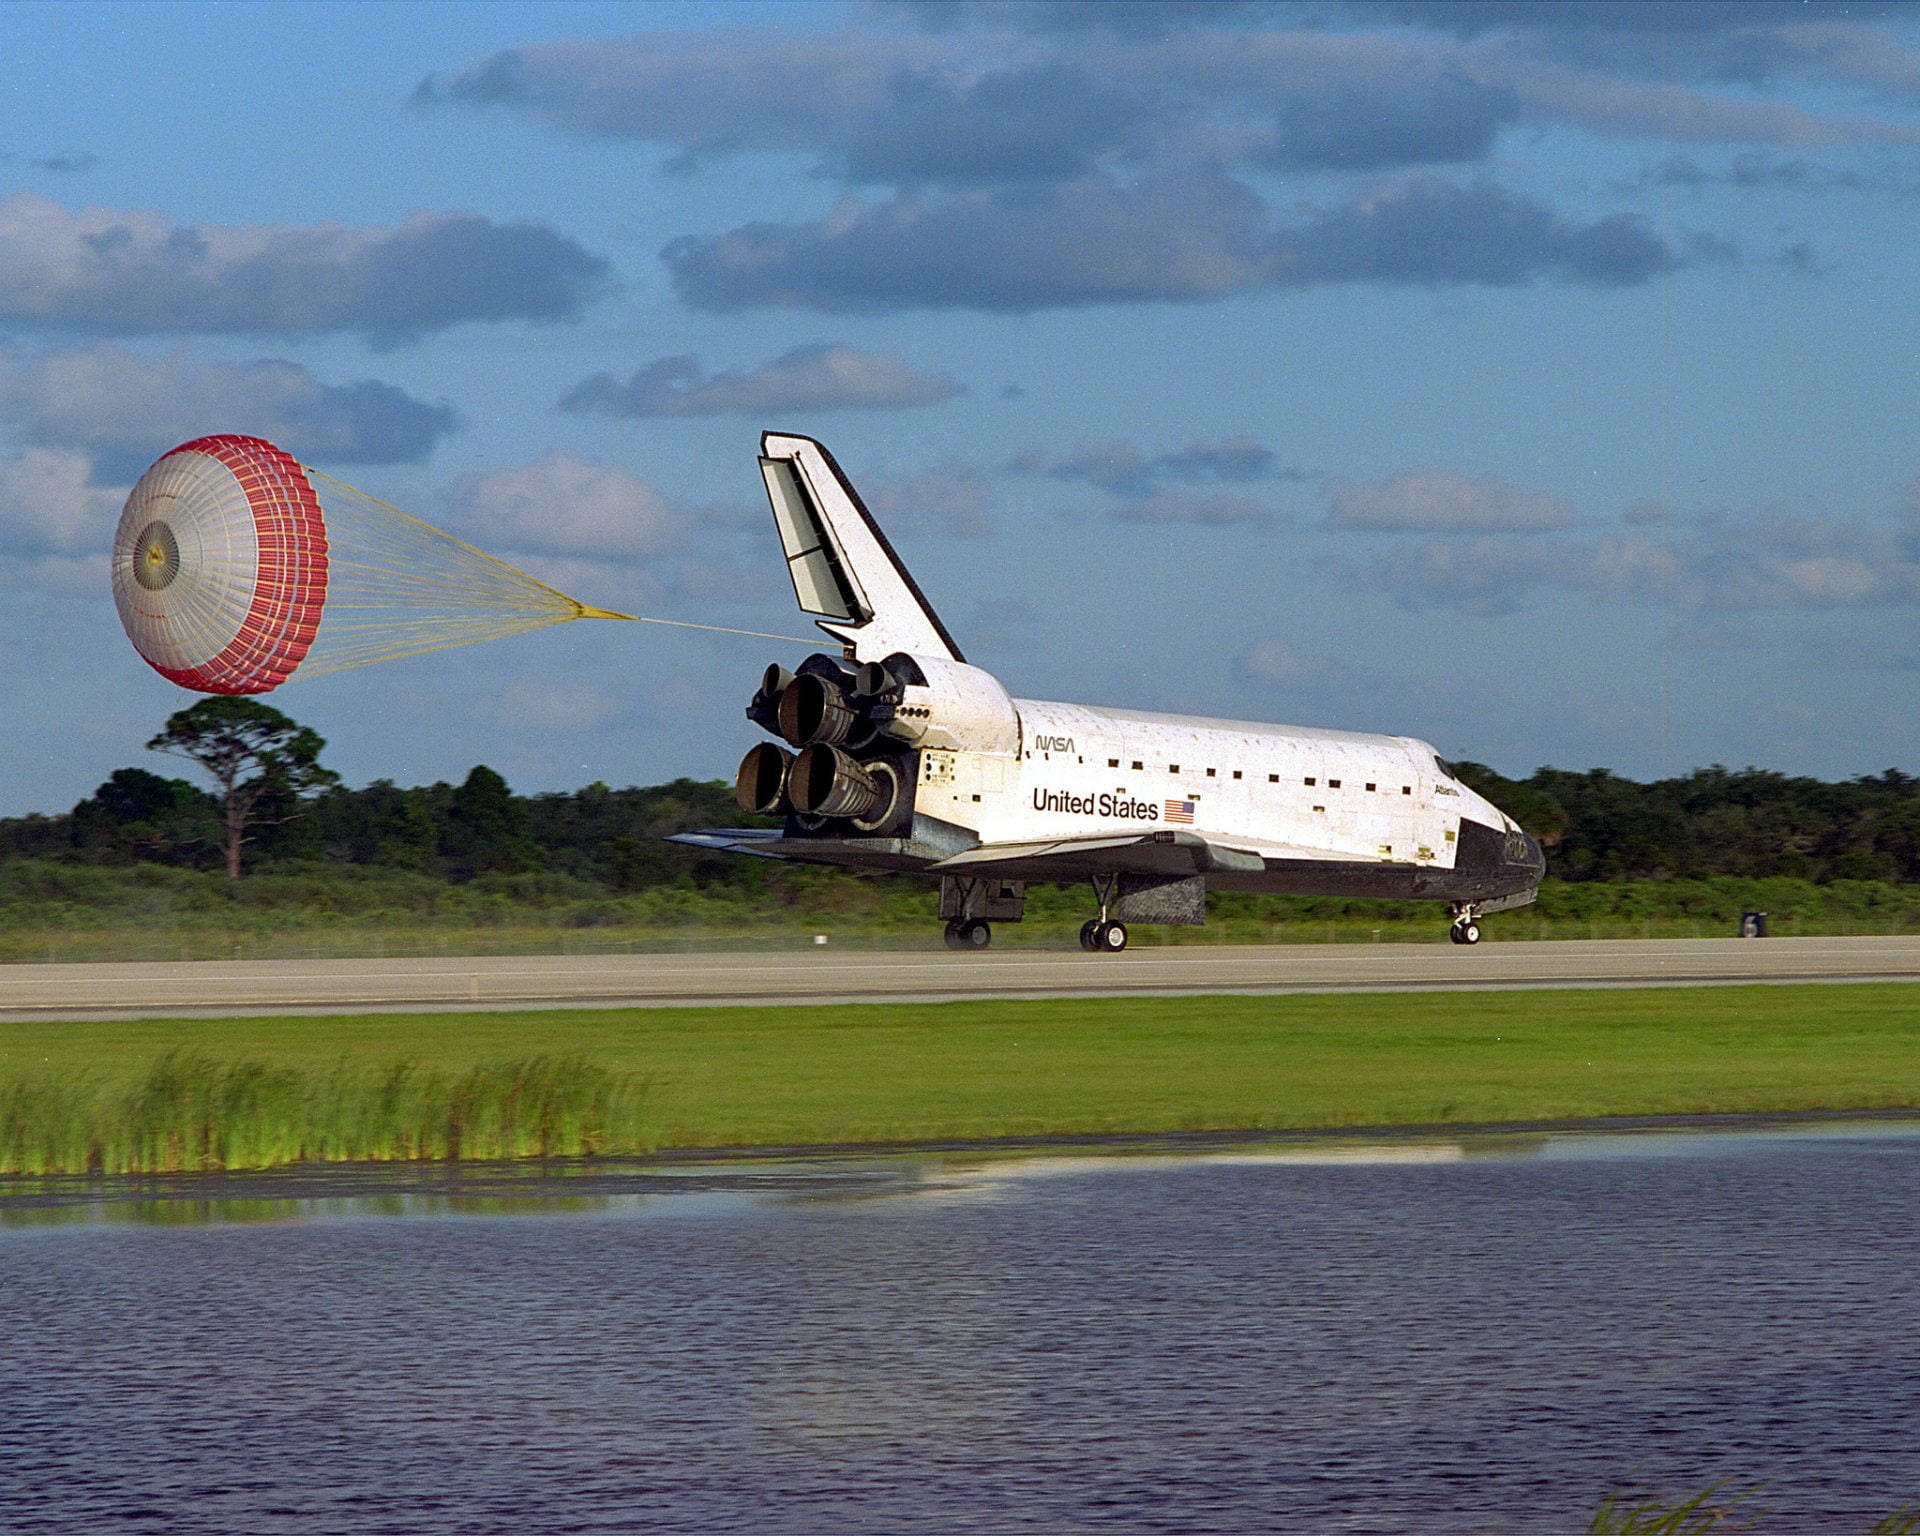 Kennedyspace Center Shuttle Atlantis Landing: Landningen Av Rymdfärjan Atlantis På Kennedy Space Center Wallpaper